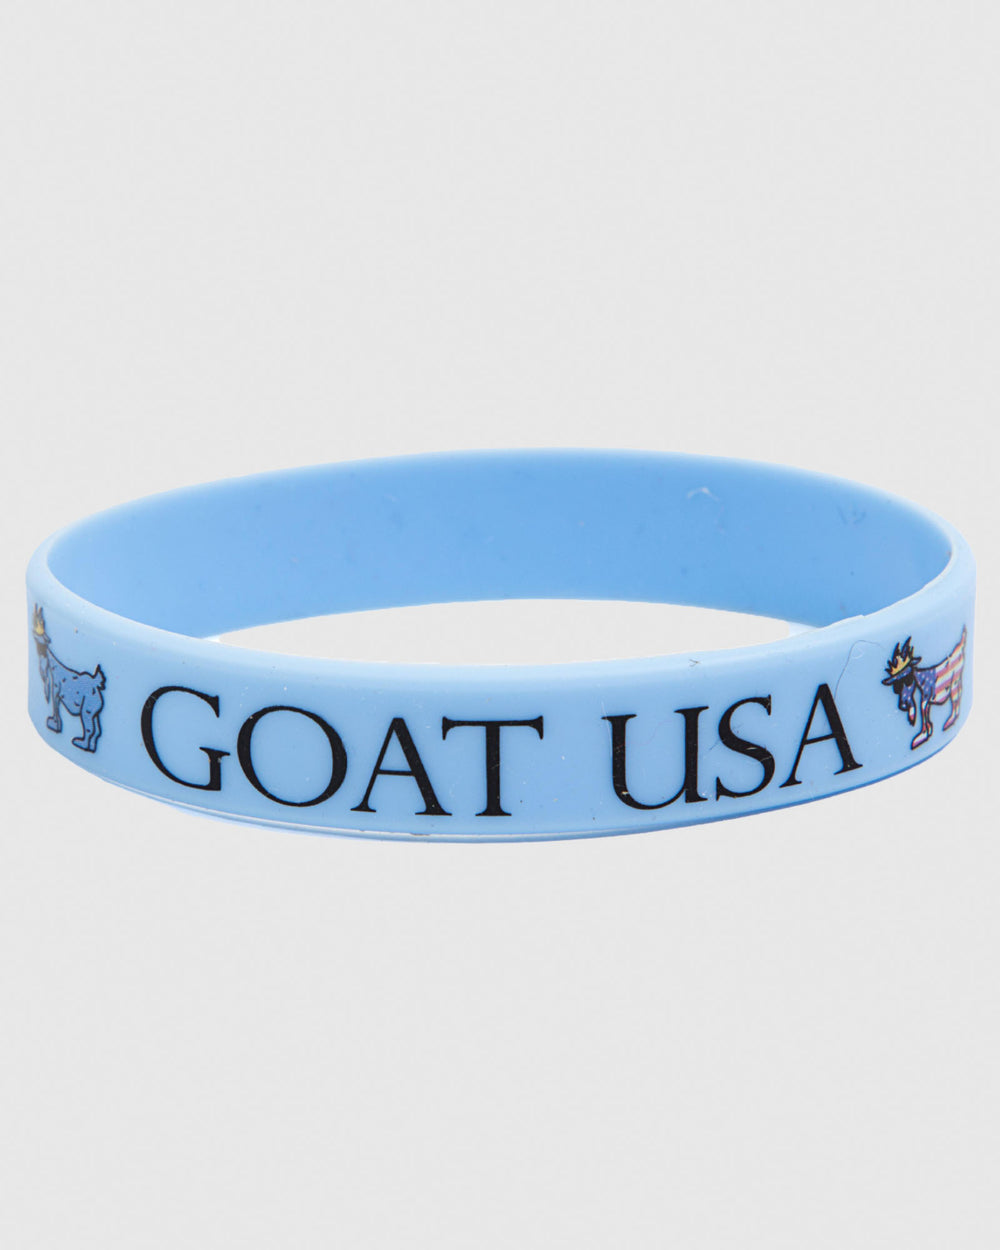 Blue silicone wristband that says "GOAT USA"